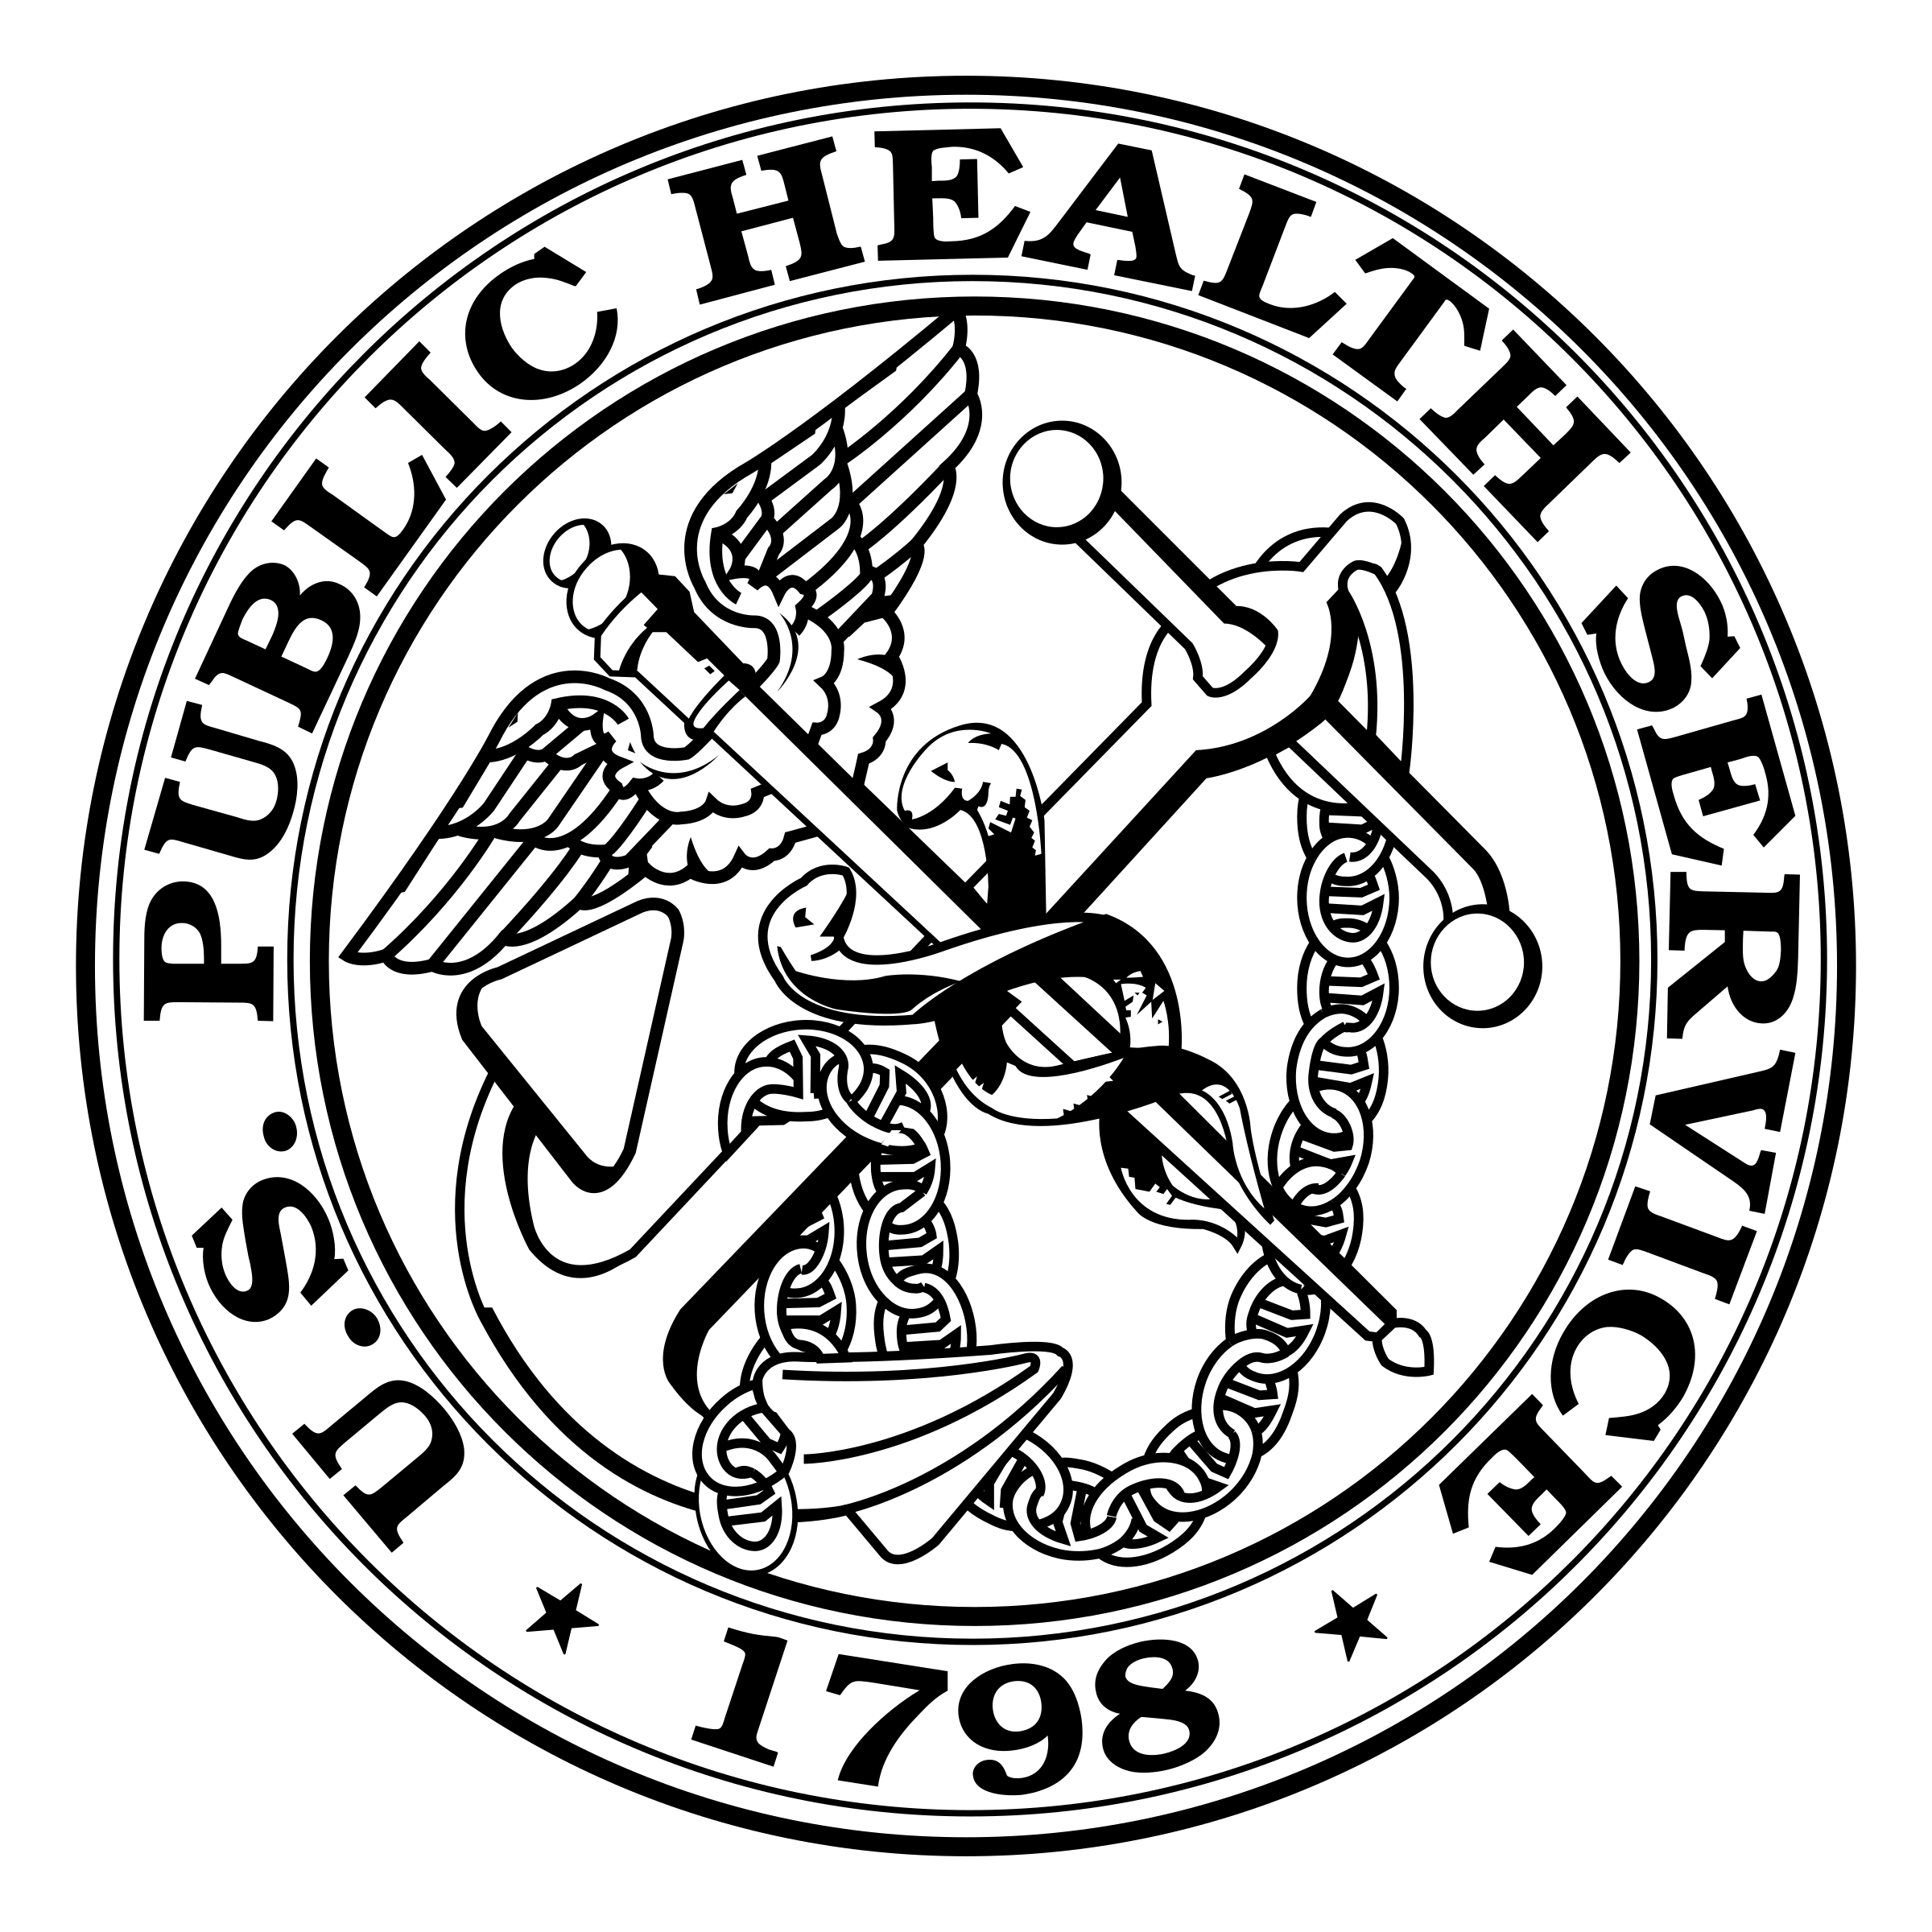 Health Service Logo - U S Public Health Service Logo PNG Transparent & SVG Vector ...